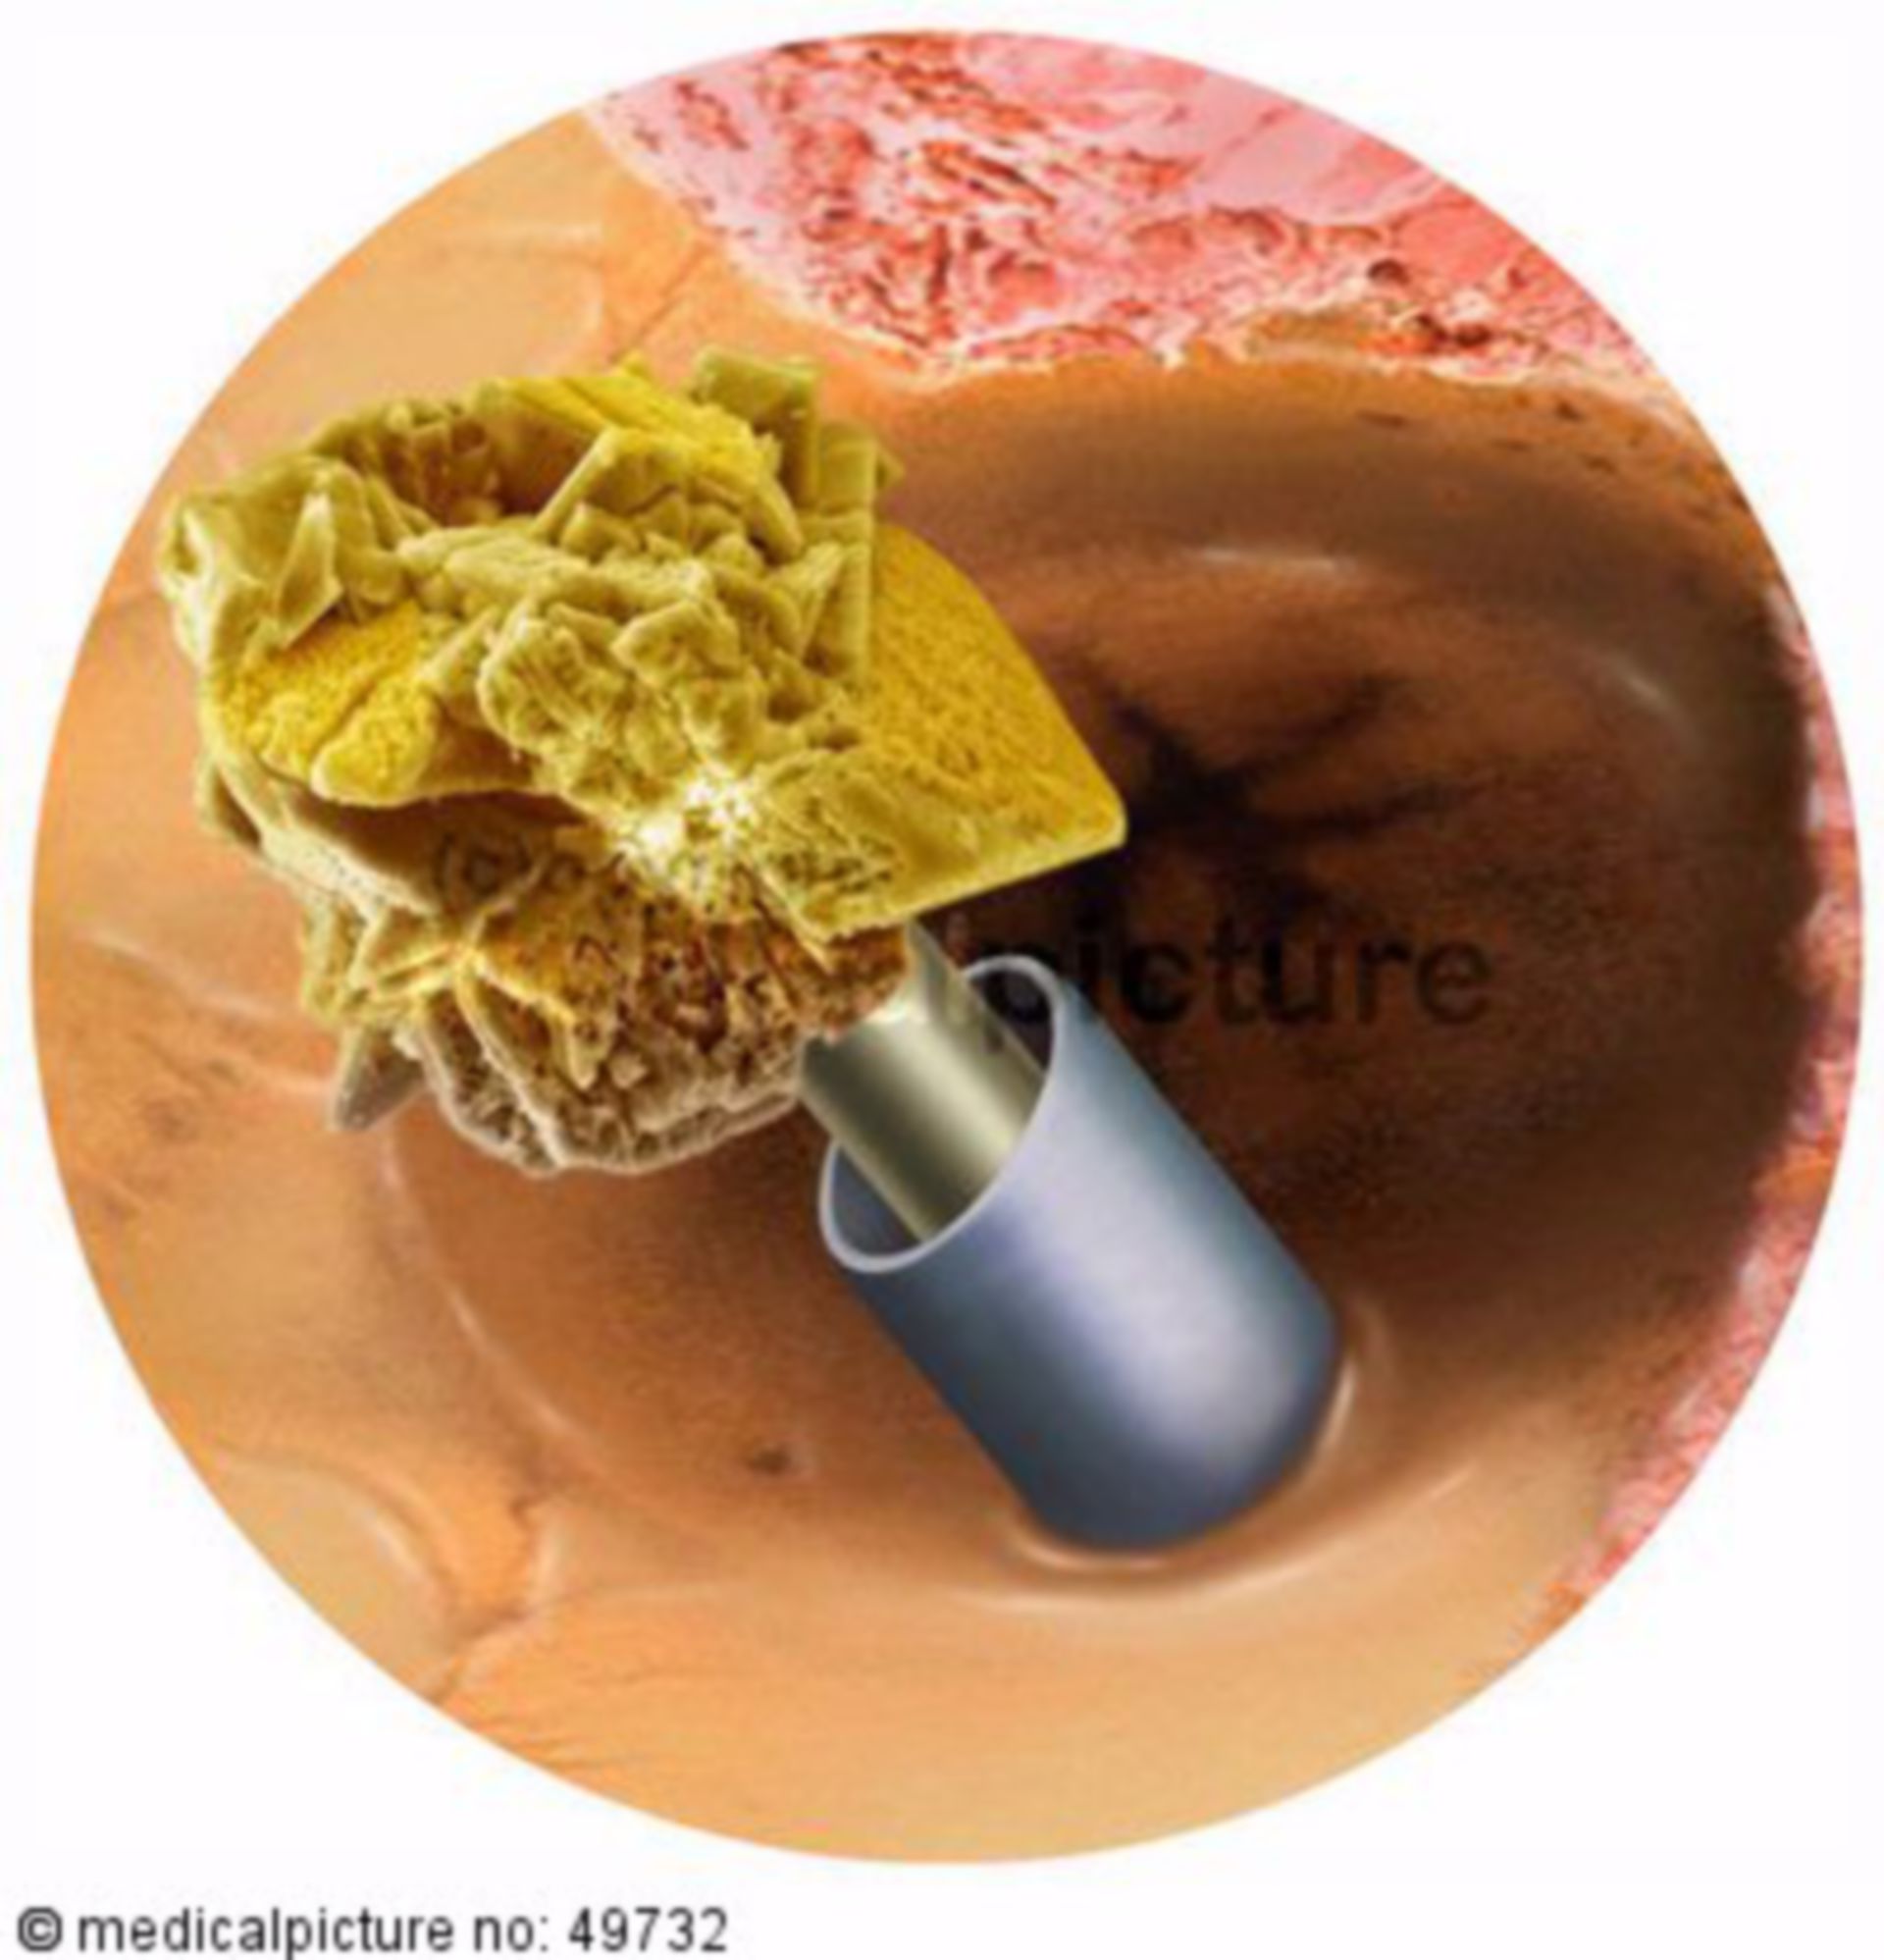 Kidney stone destruction in case of nephrolithiasis, renal pelvis